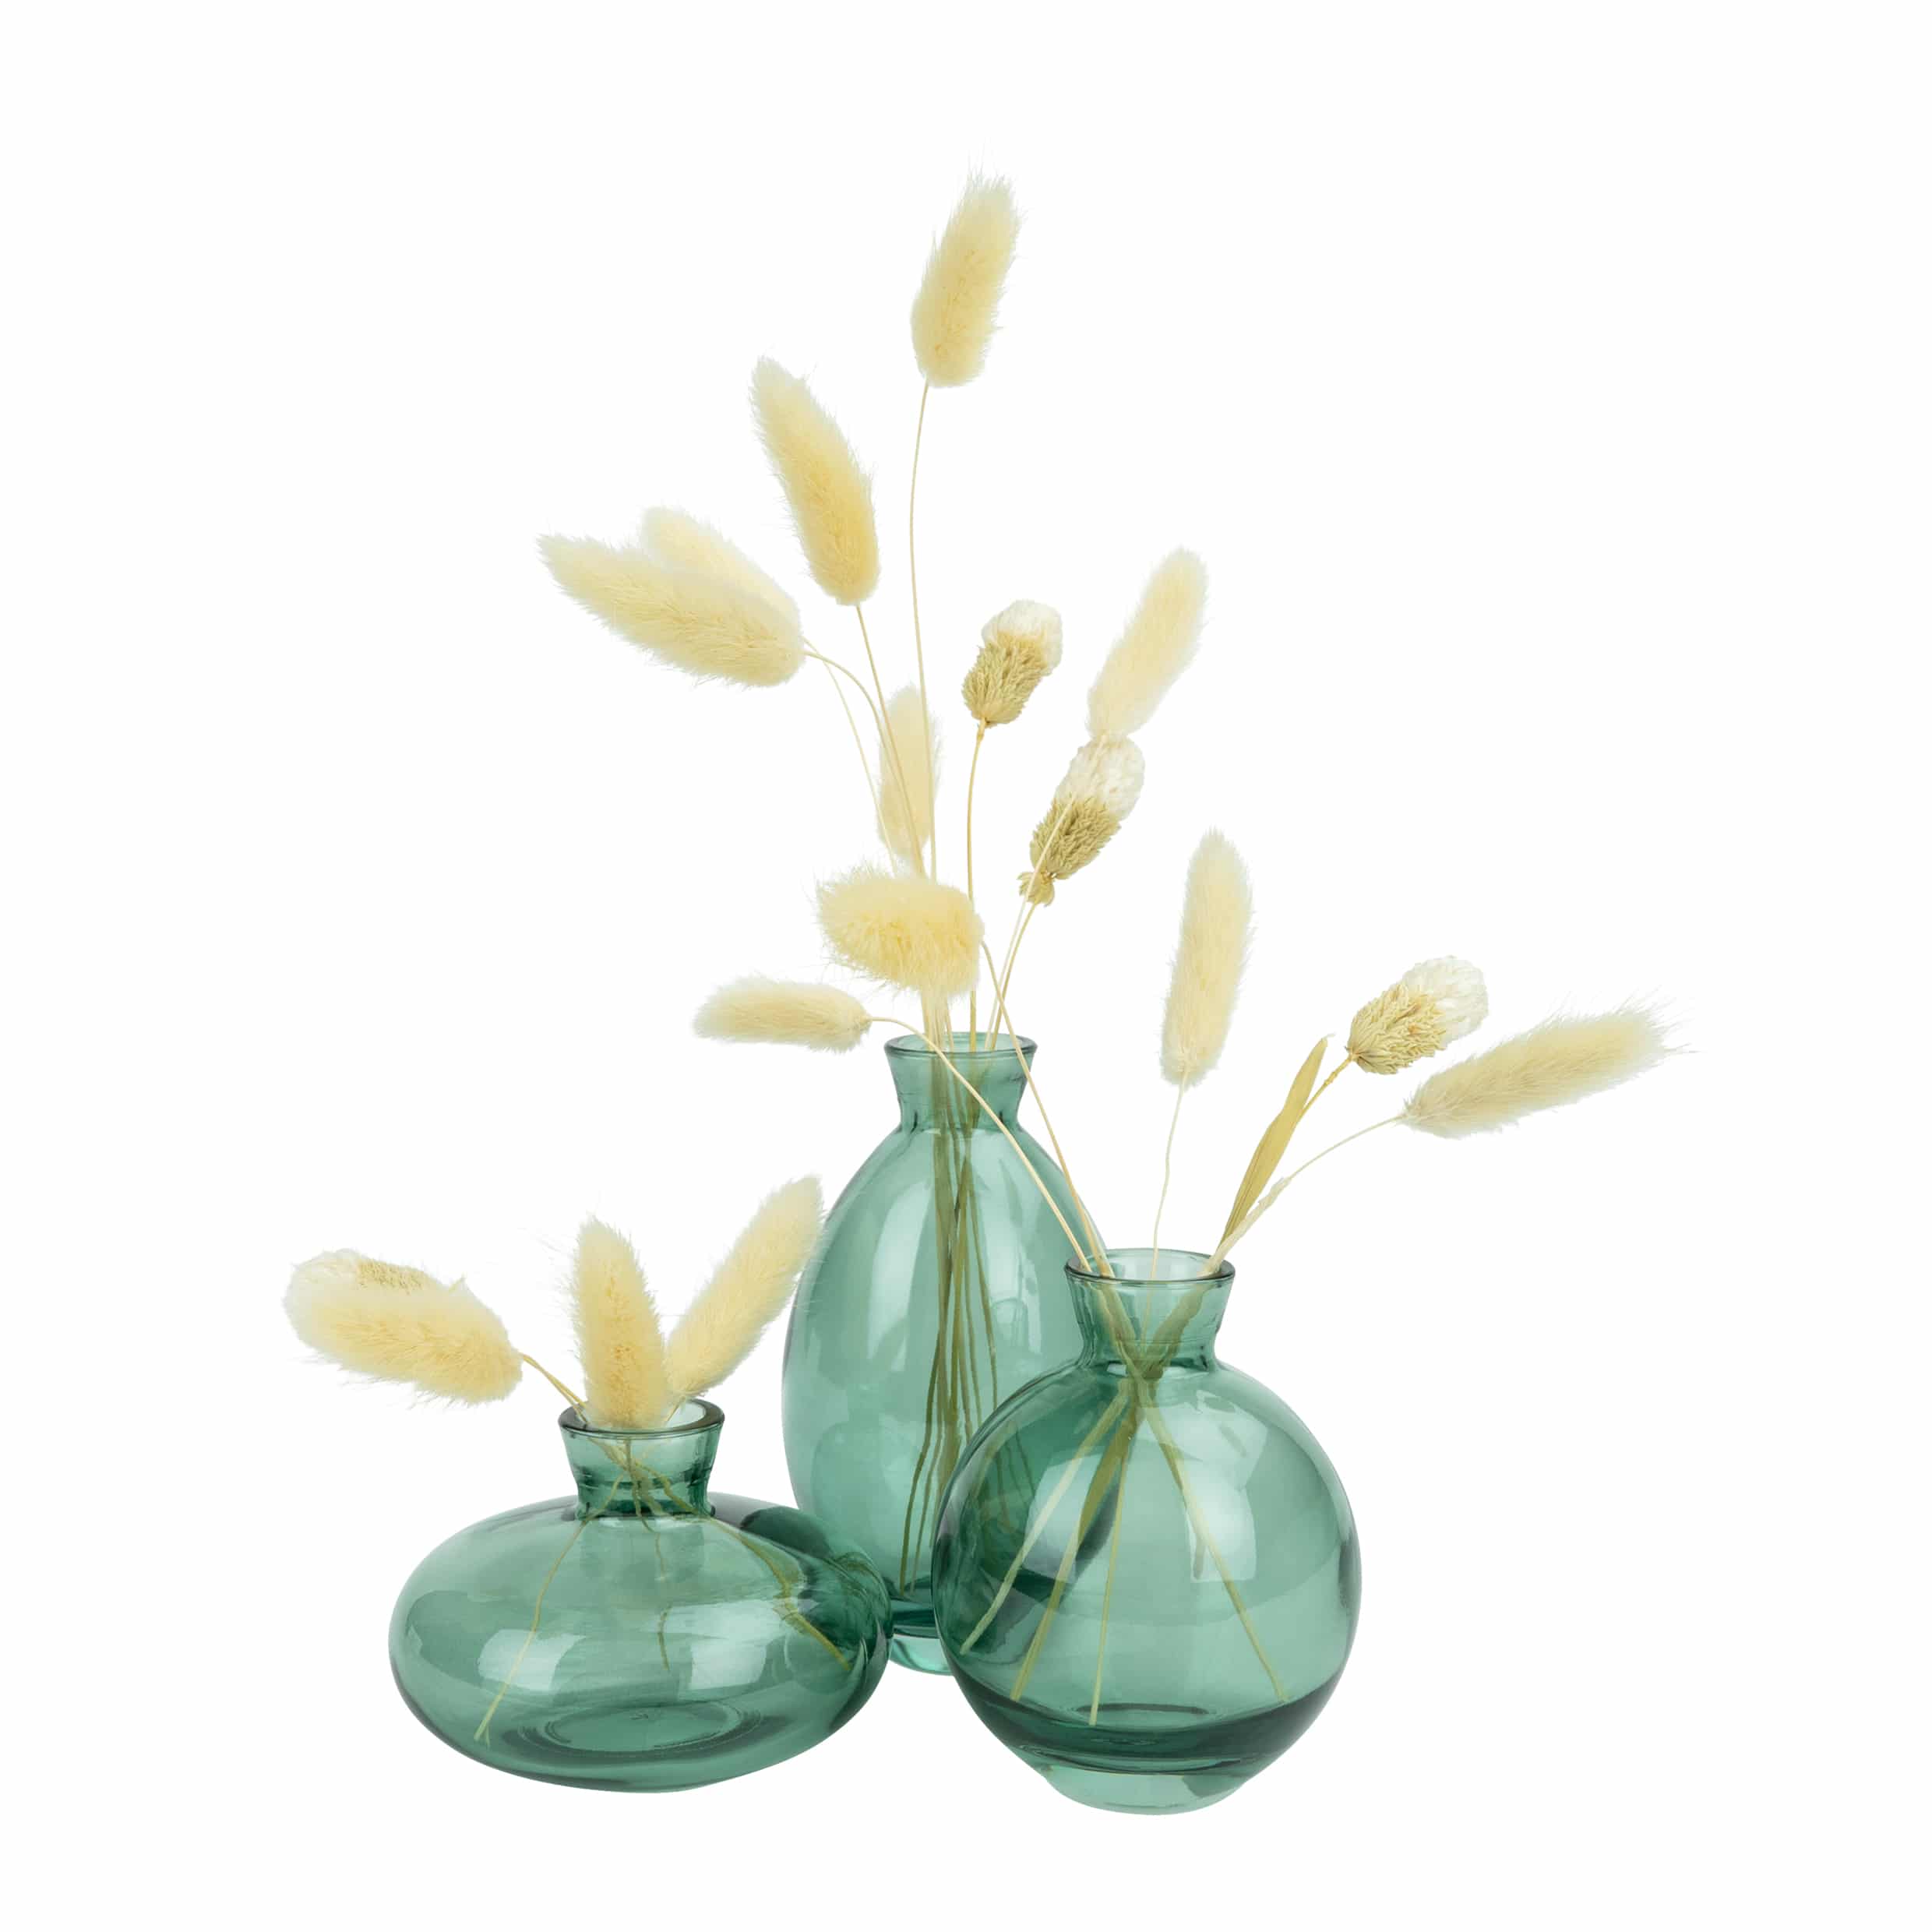 QUVIO Vazen set van 3 - Glas - Transparant groen